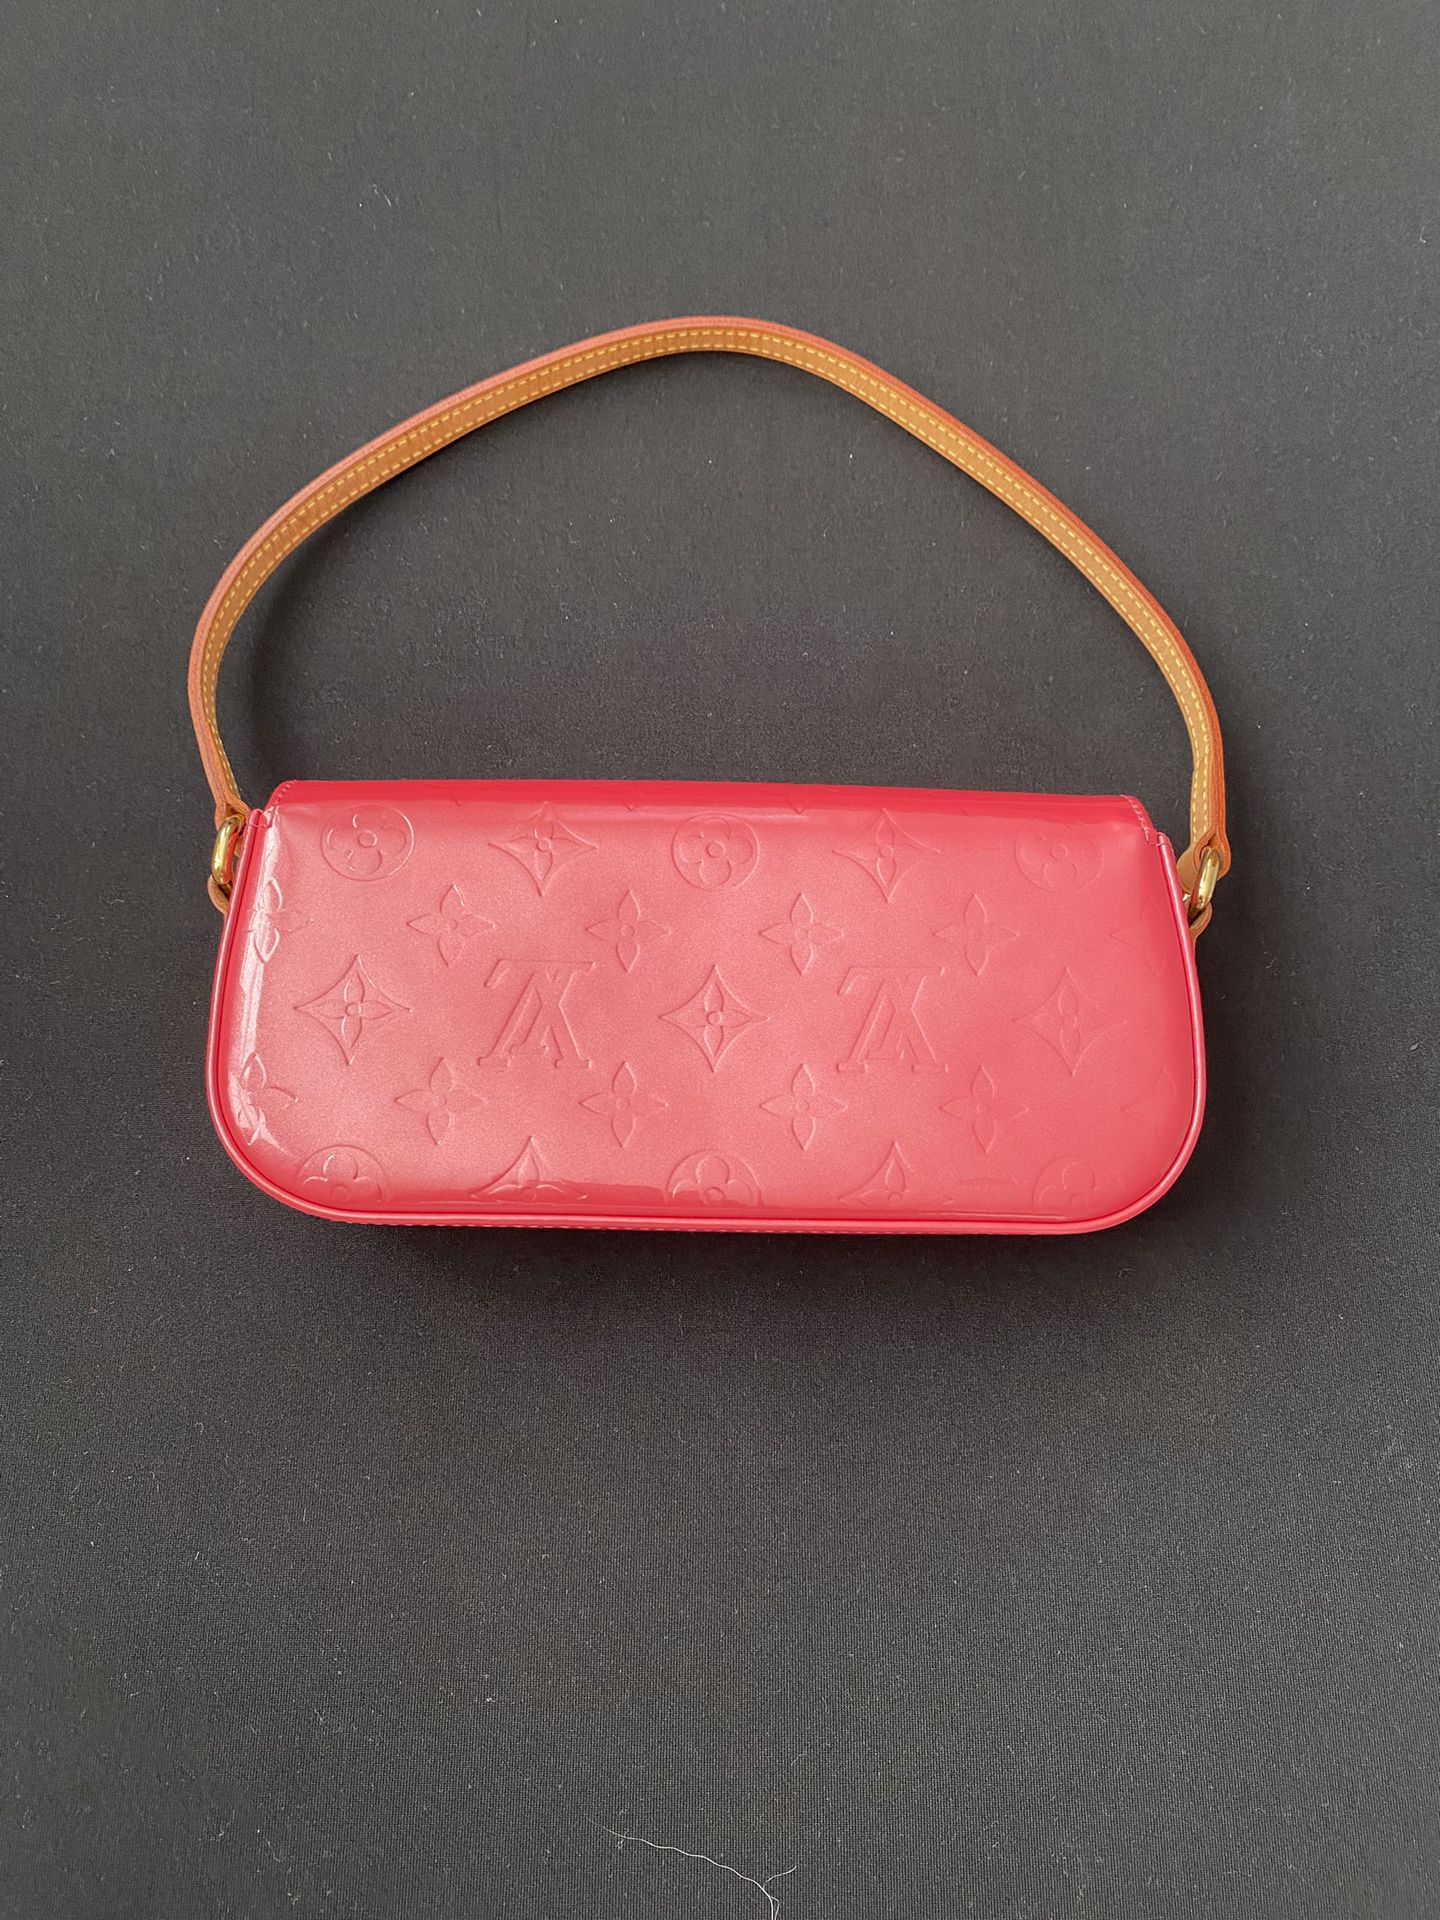 Louis Vuitton Monogram Rose Ballerine Cherrwood Pink Patent Leather WOC for  Sale in Costa Mesa, CA - OfferUp